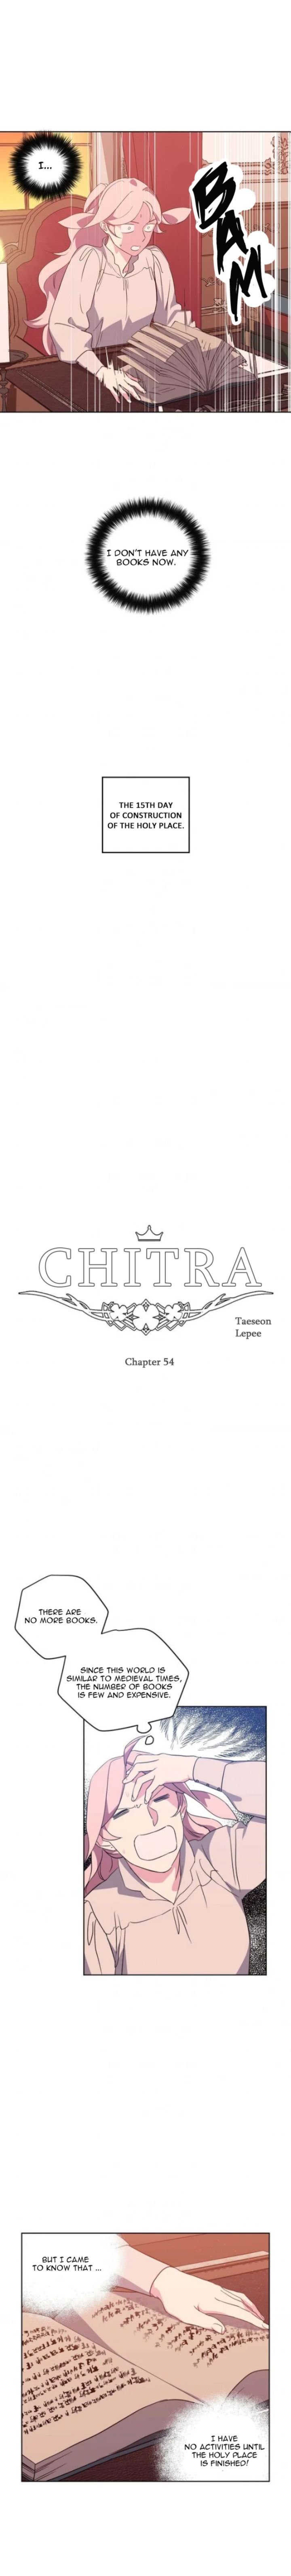 chitra_54_2